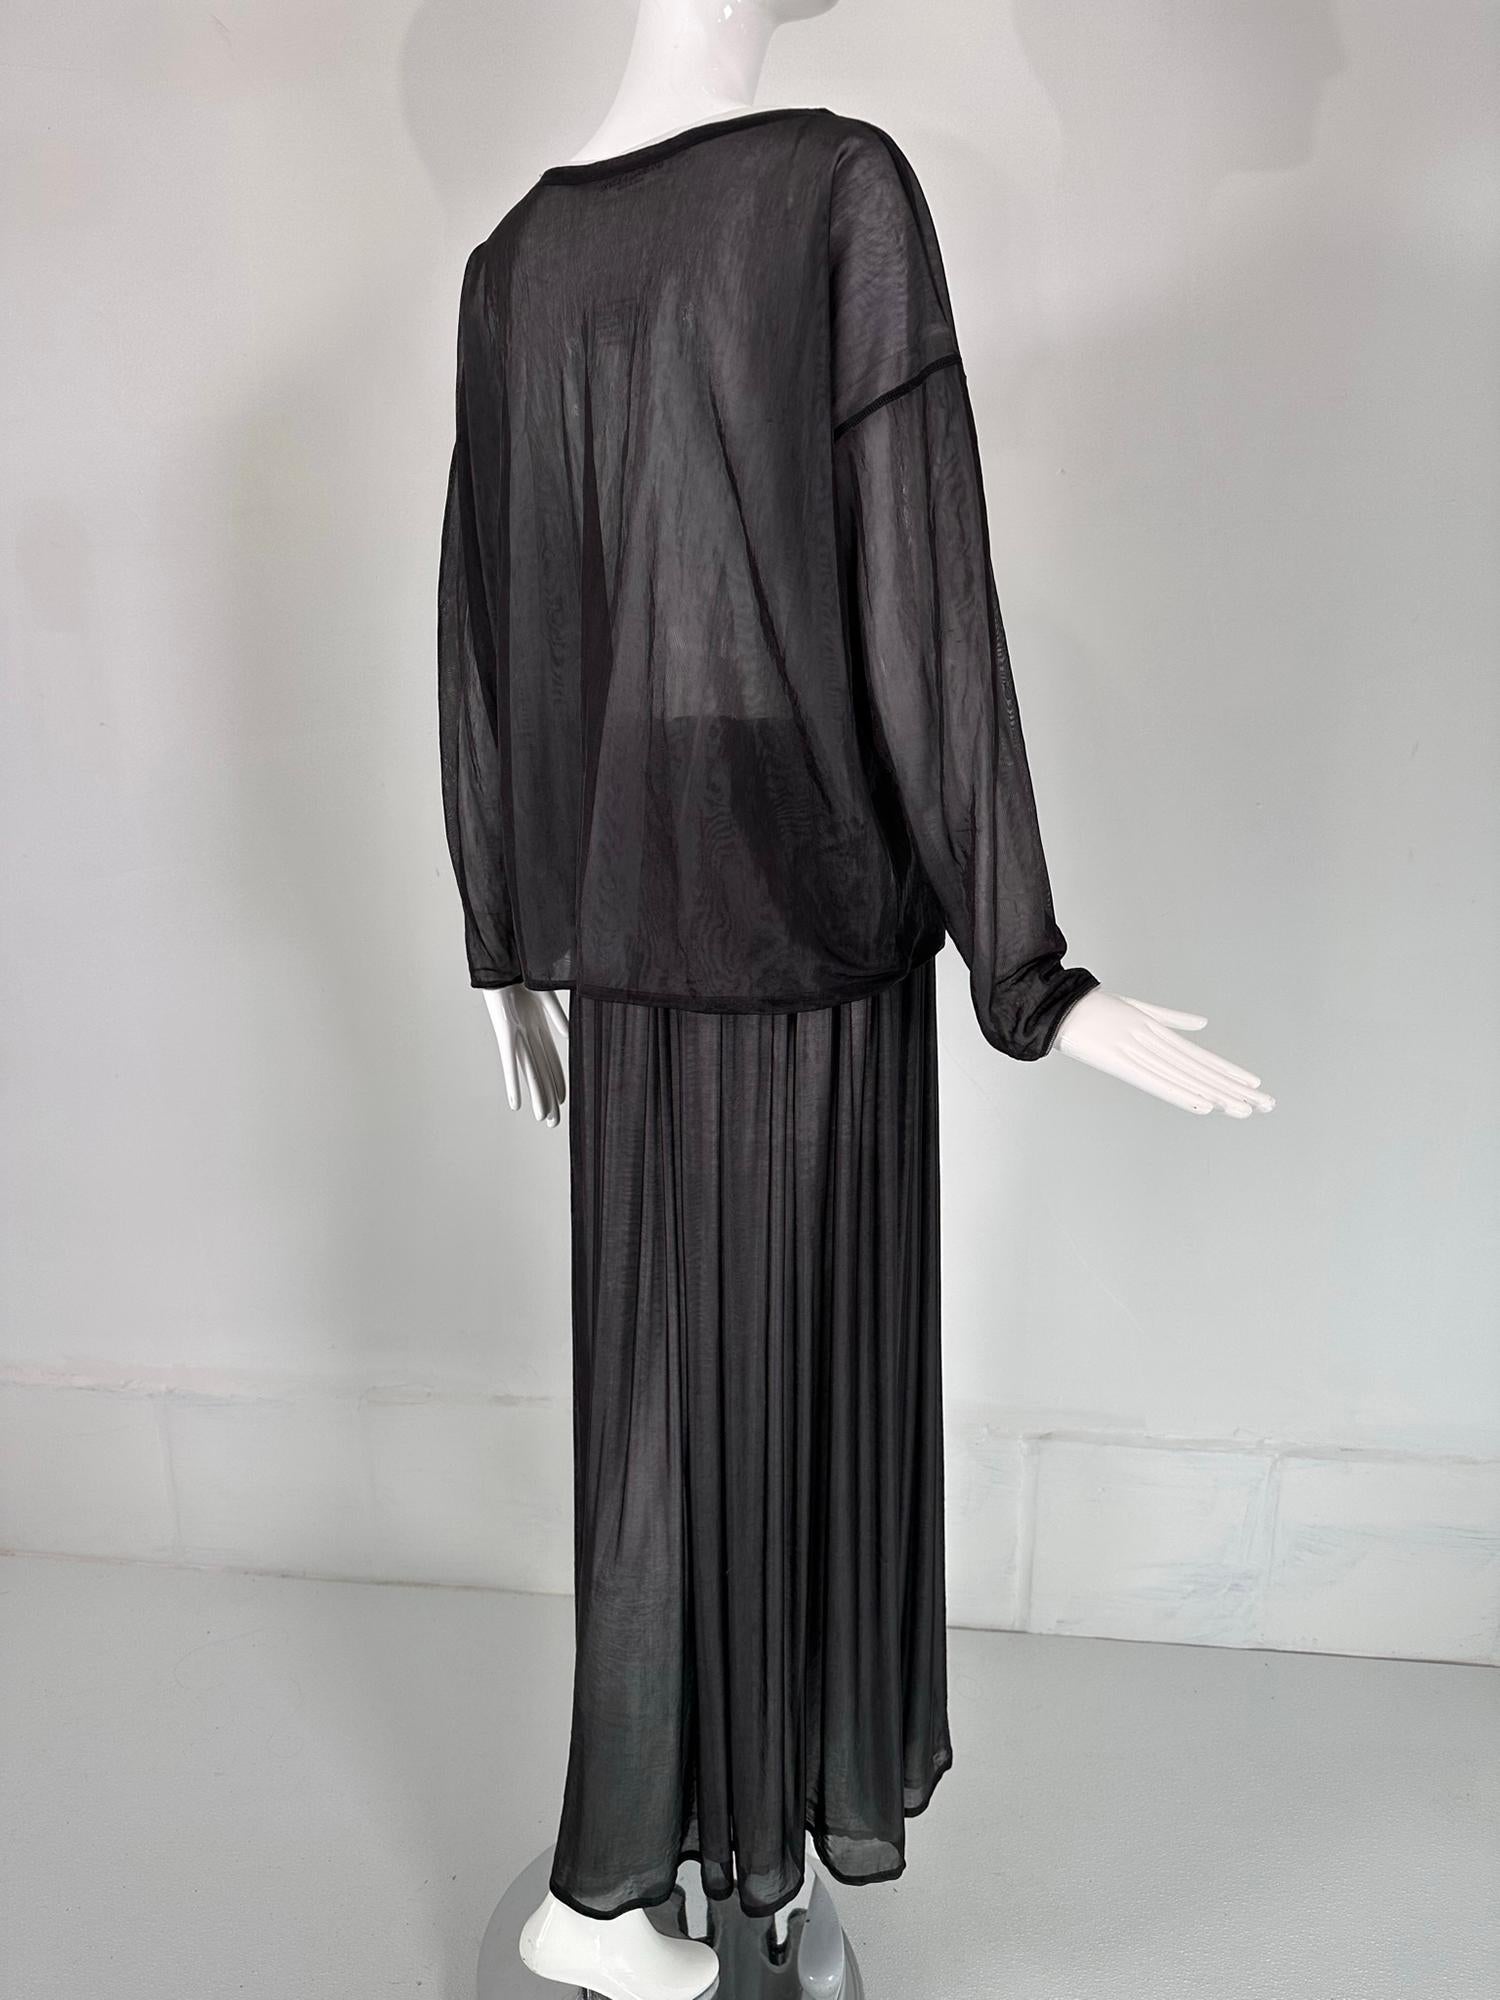 Dolce & Gabbana Sheer Black & White Nylon Athleisure Over size Top & Maxi Skirt  For Sale 2